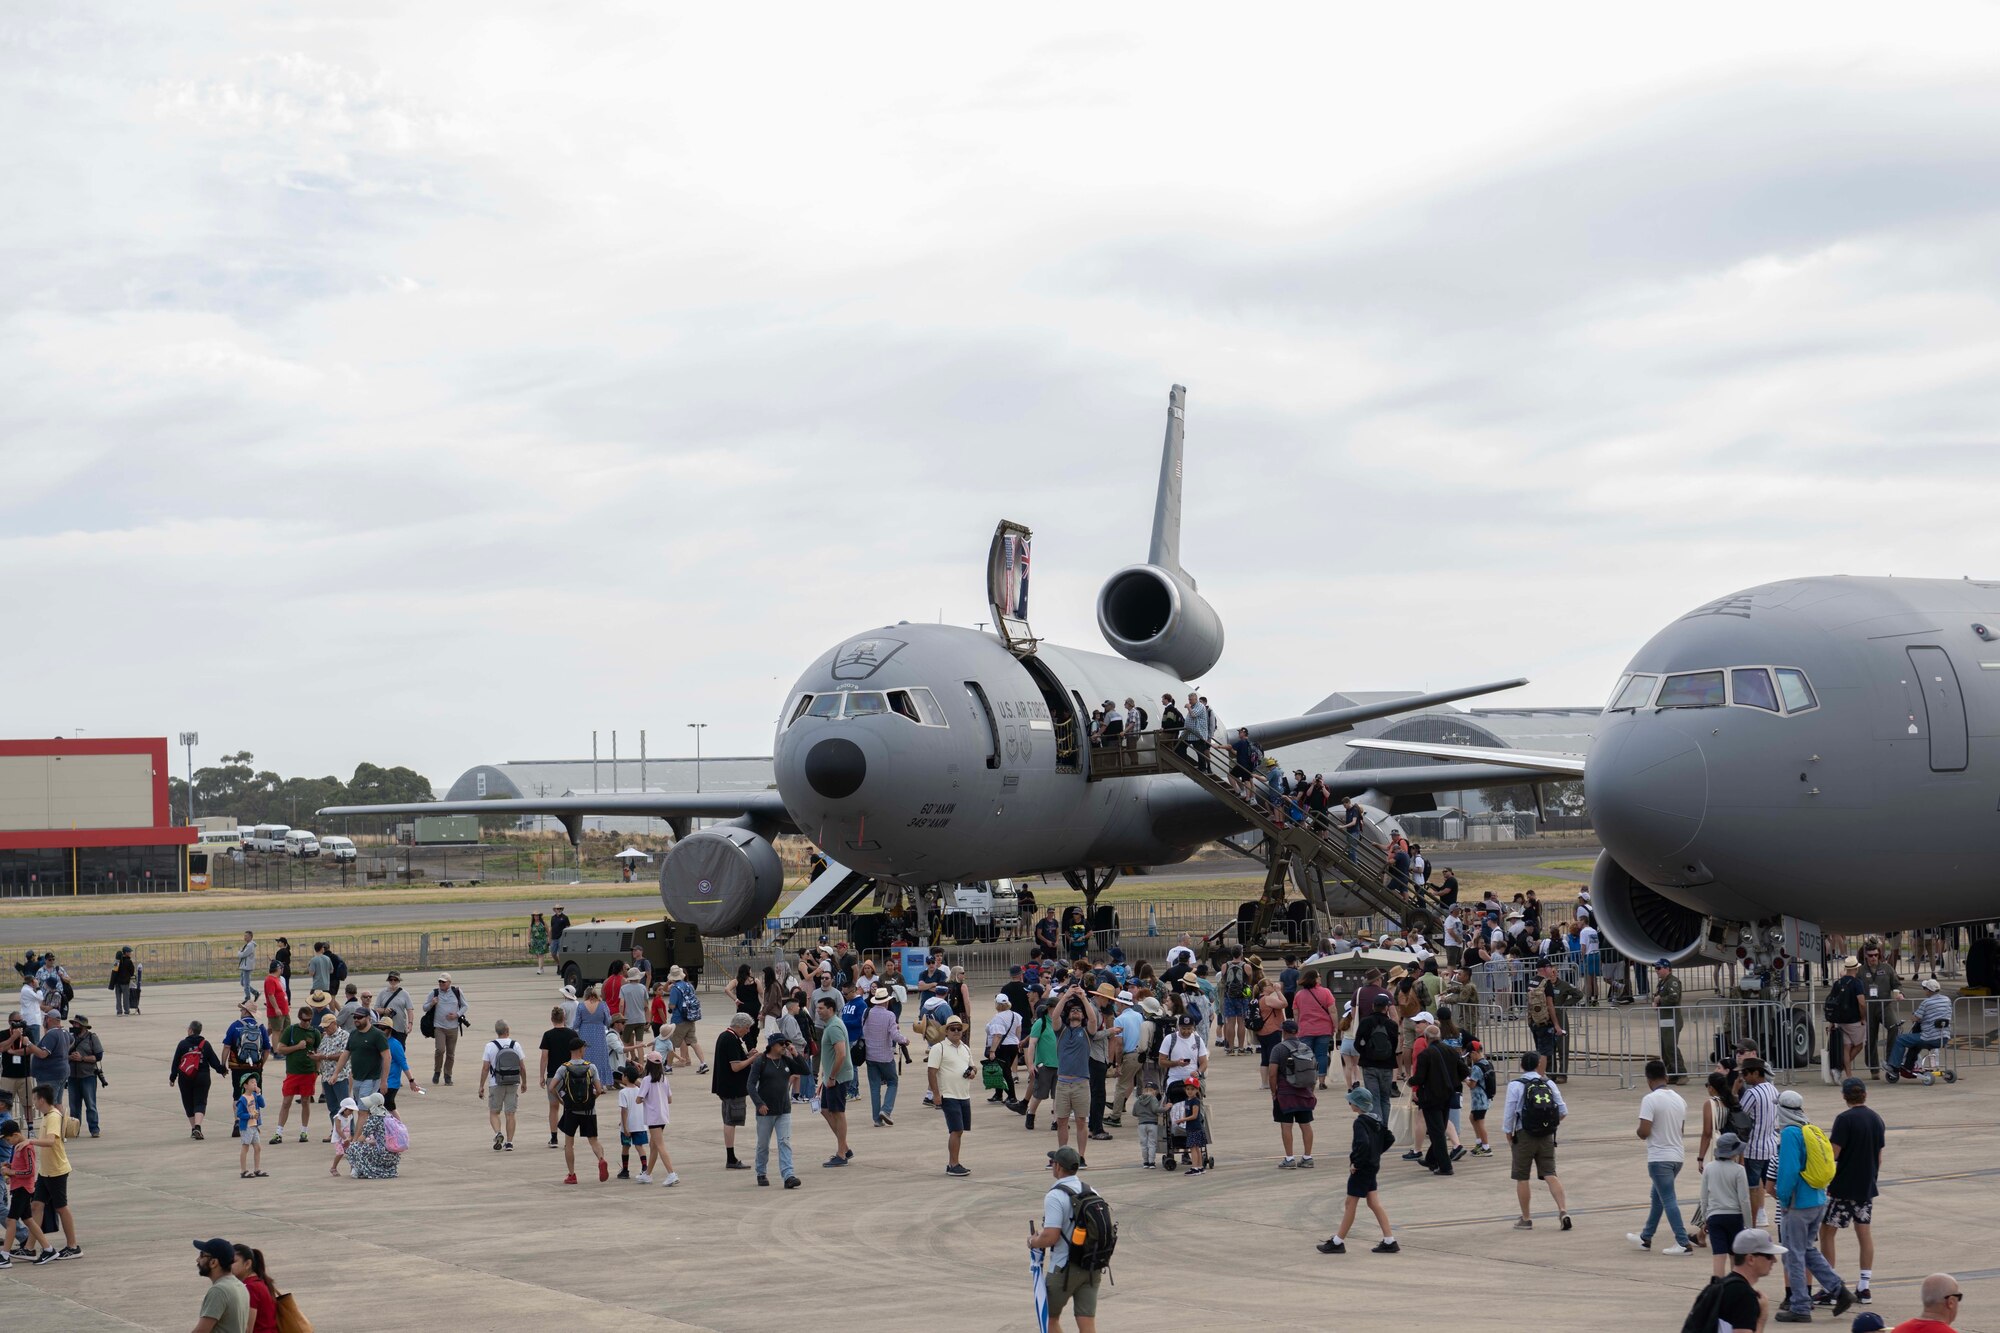 A crowd of people walk around big aircraft.